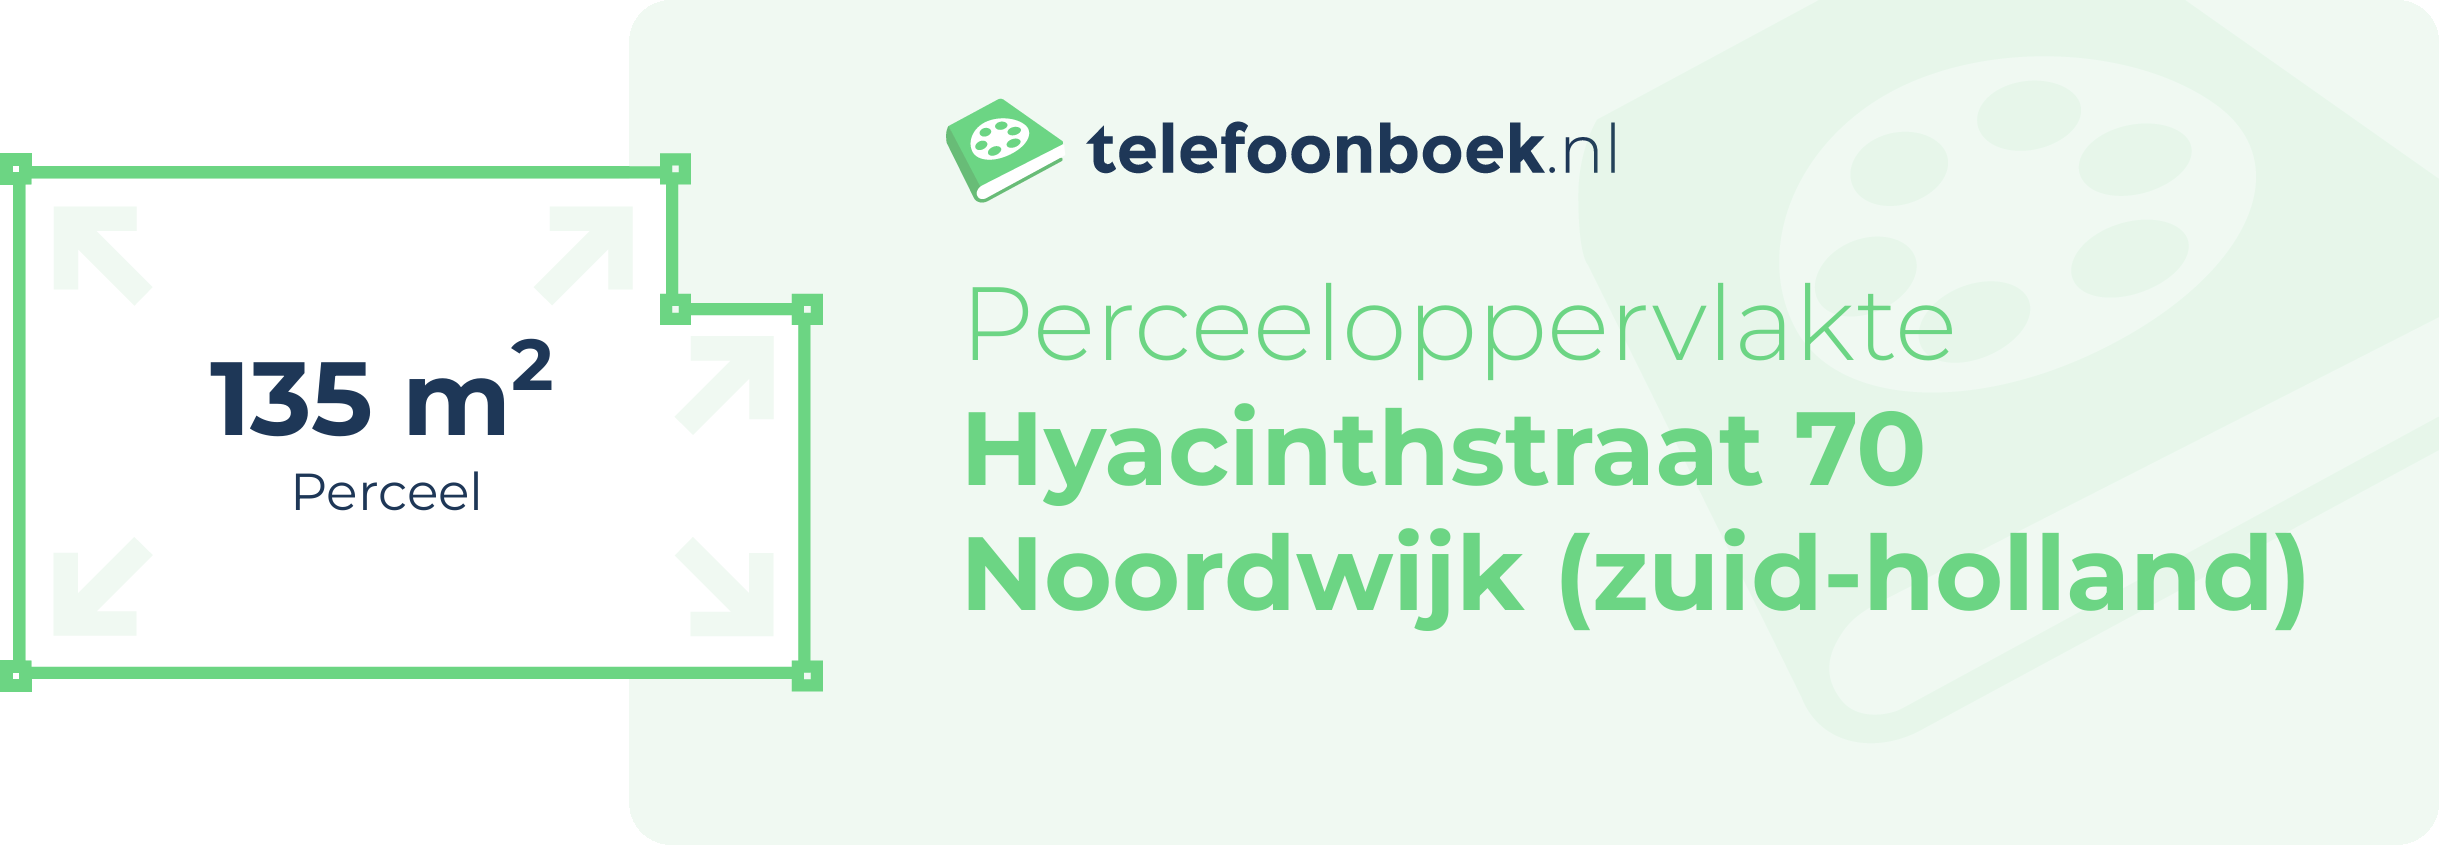 Perceeloppervlakte Hyacinthstraat 70 Noordwijk (Zuid-Holland)